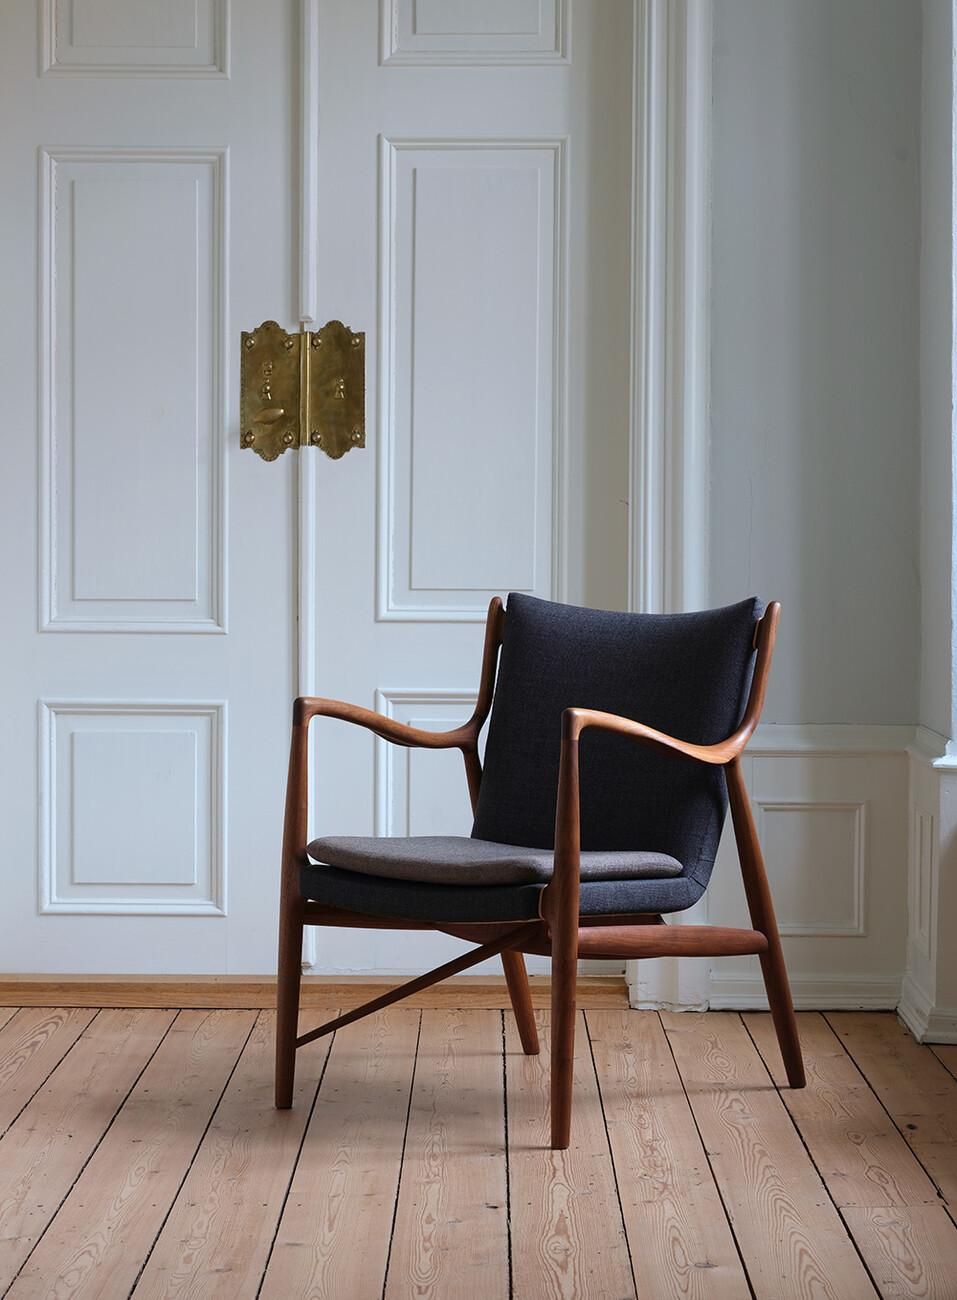 Finn Juhl 45 Chair, Wood and Leather by House of Finn Juhl 3